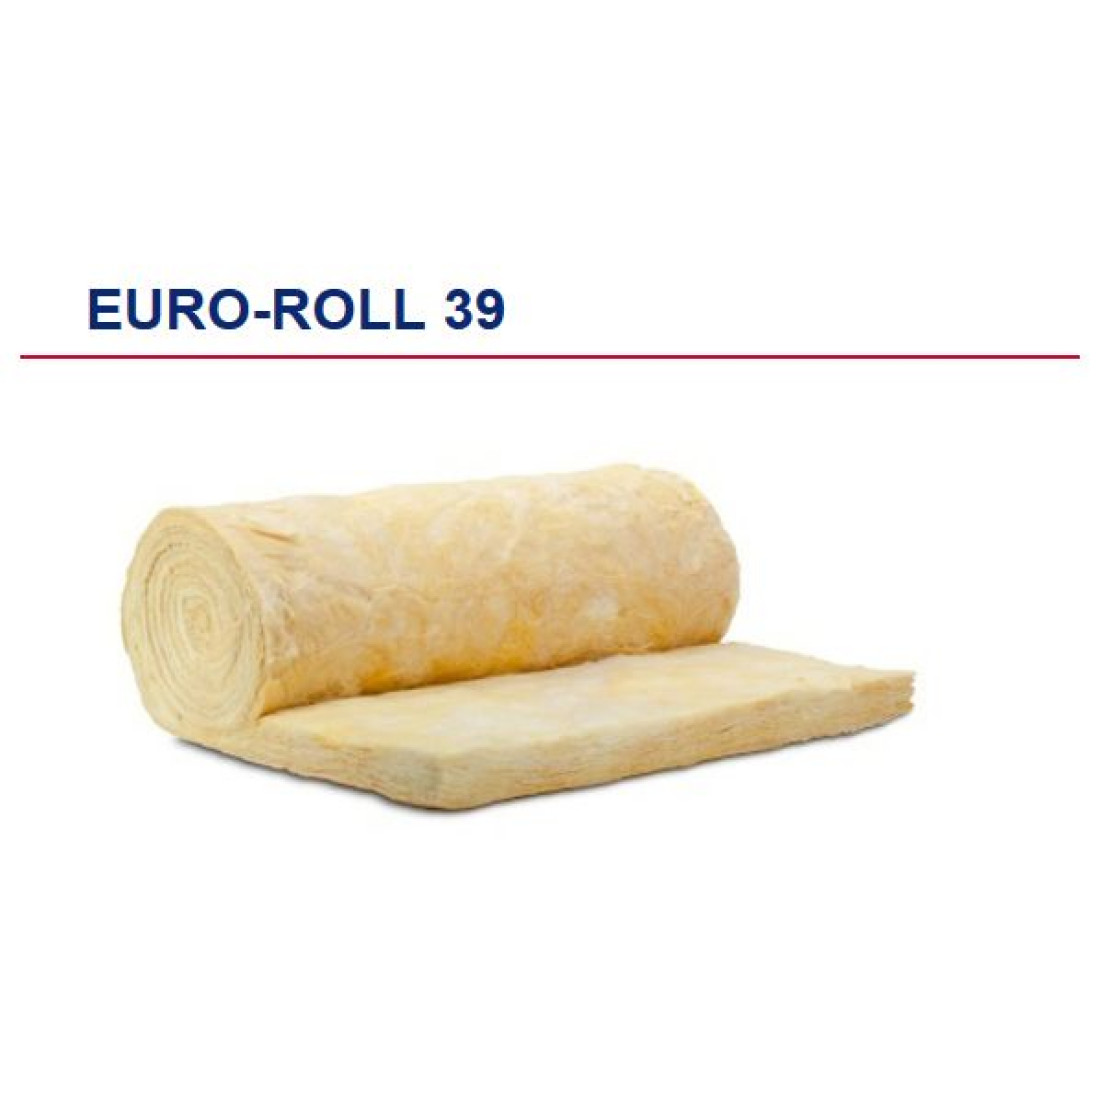  Euro-Roll 39 - oferuje firma Scala Plastics Poland